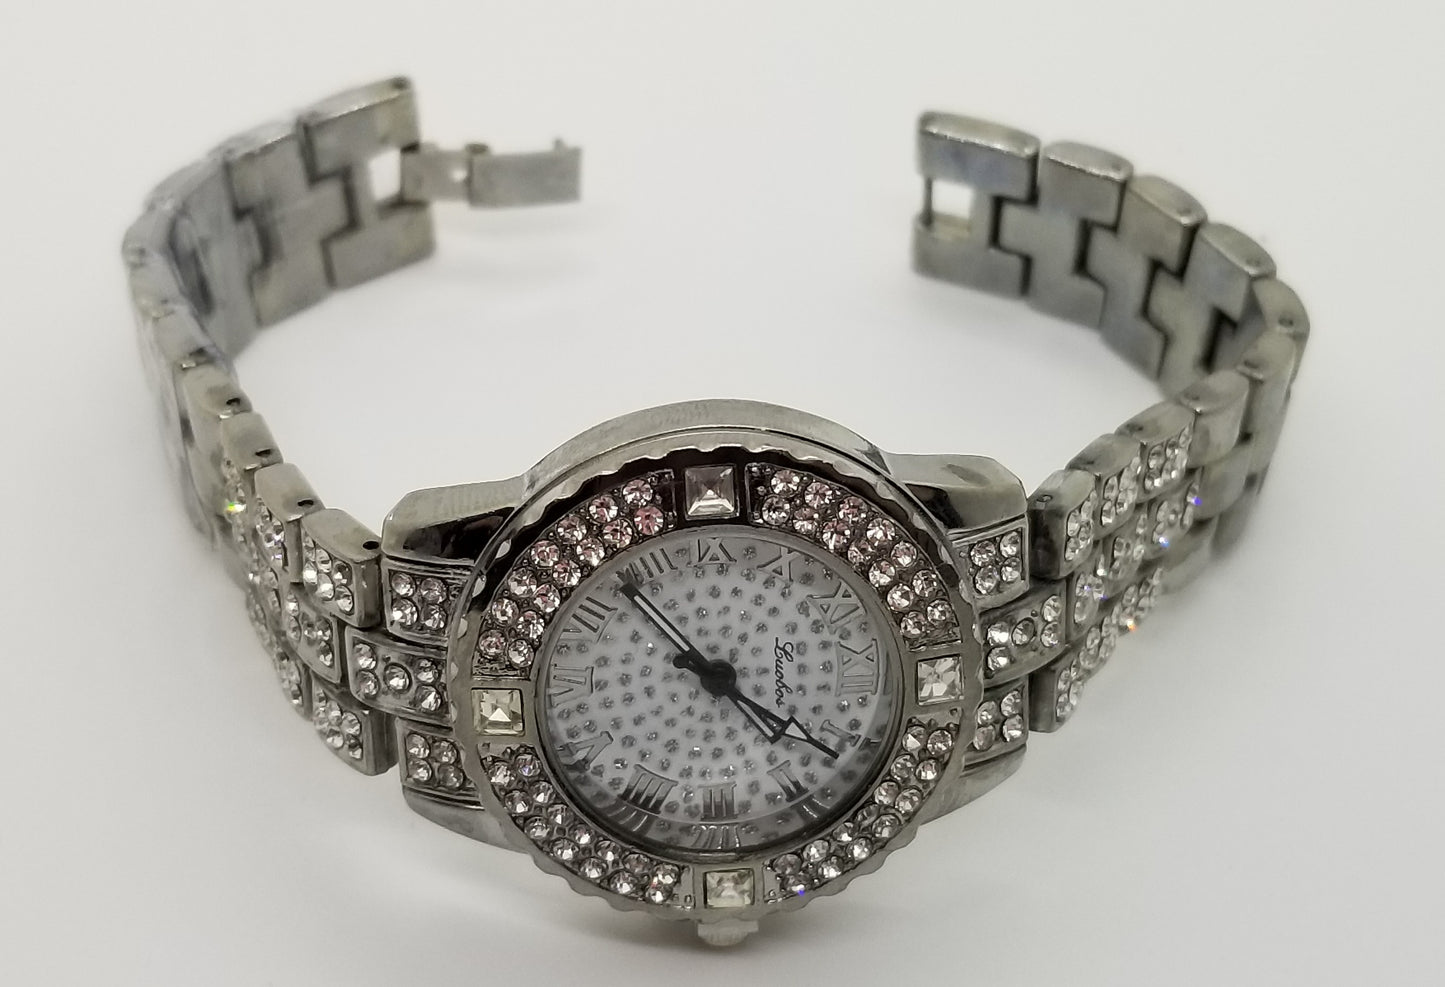 Luobos fashion watch base metal with rhinestones clasp bracelet